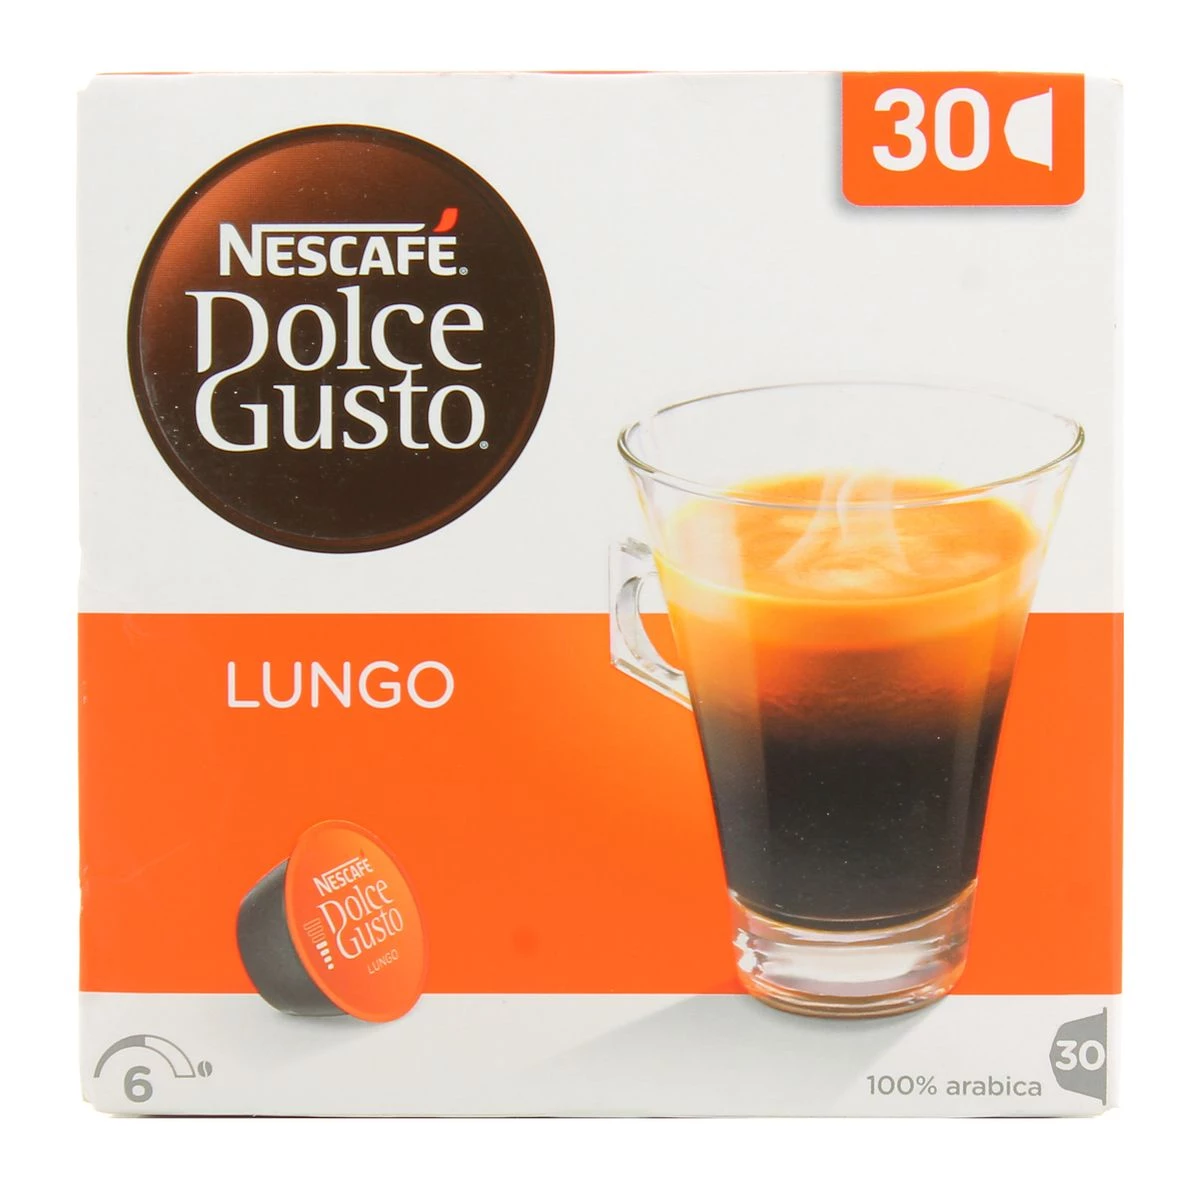 Lange koffie x30 capsules 210g - NESCAFÉ DOLCE GUSTO